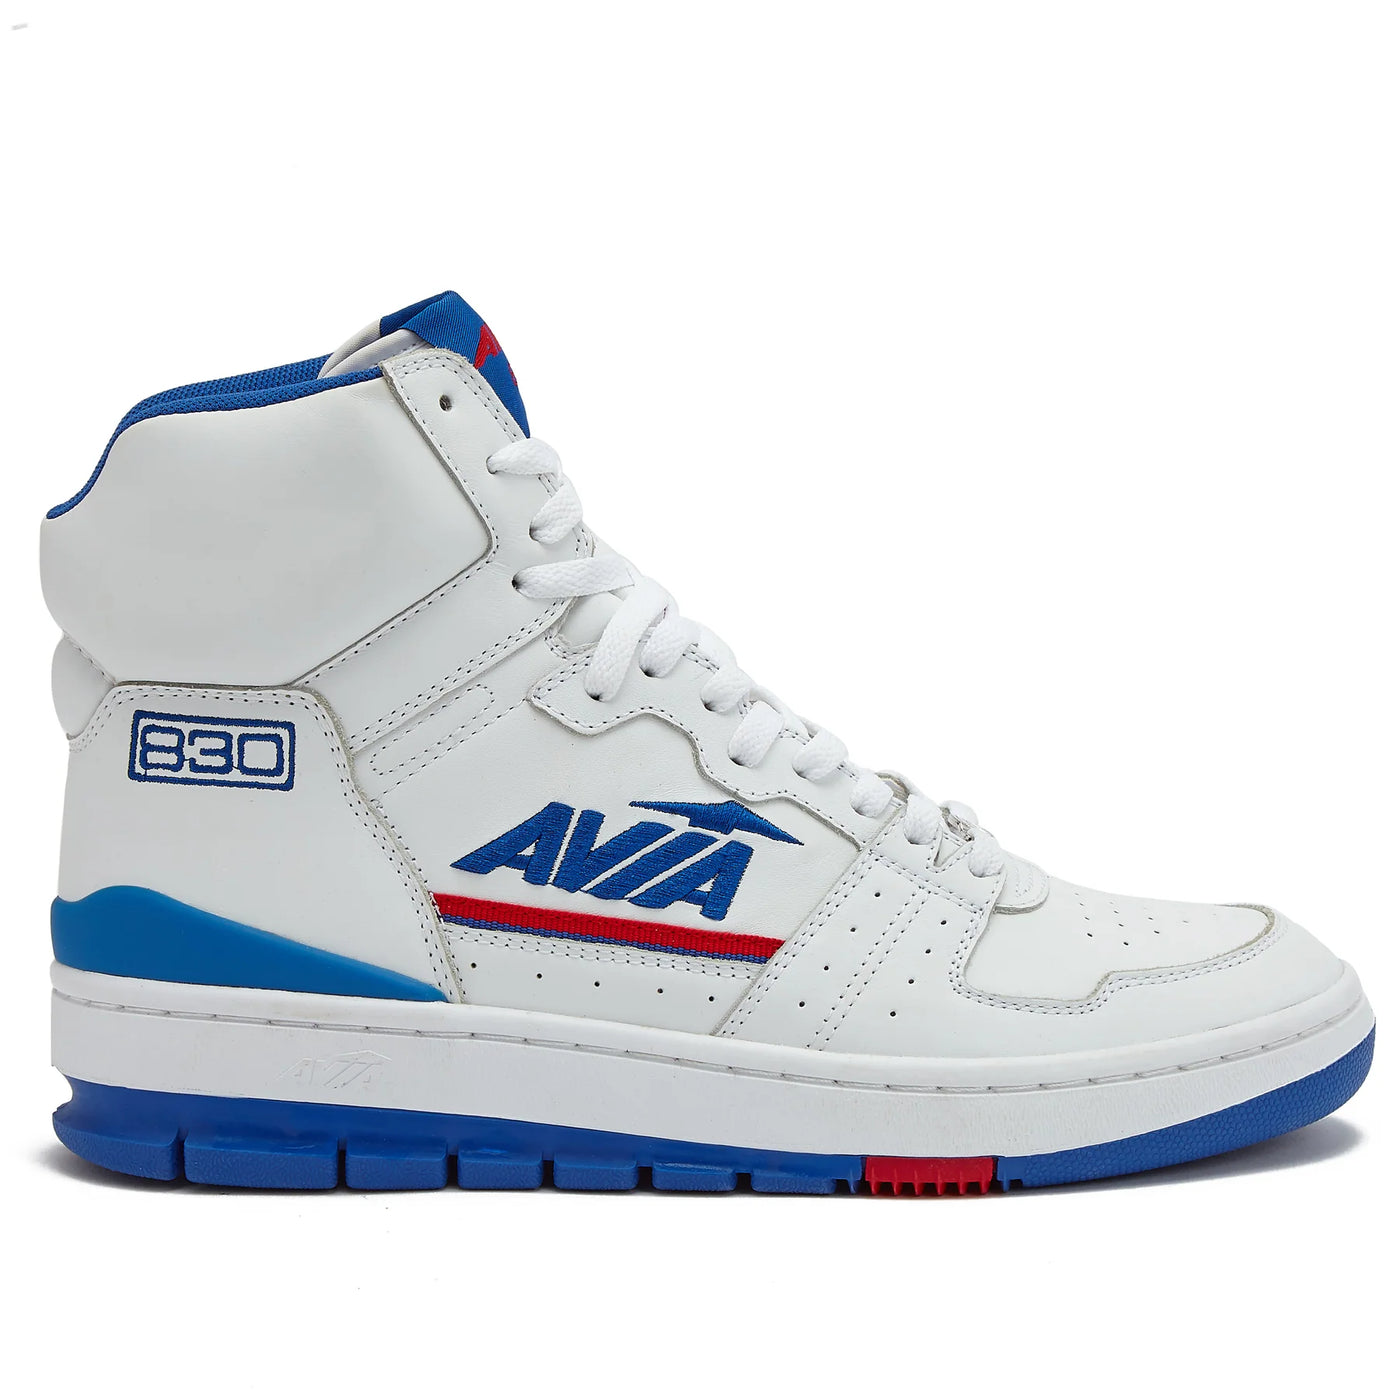 Avia Men's Avi Retro 830 White Blue Red Classic Basketball Shoes Sneakers 